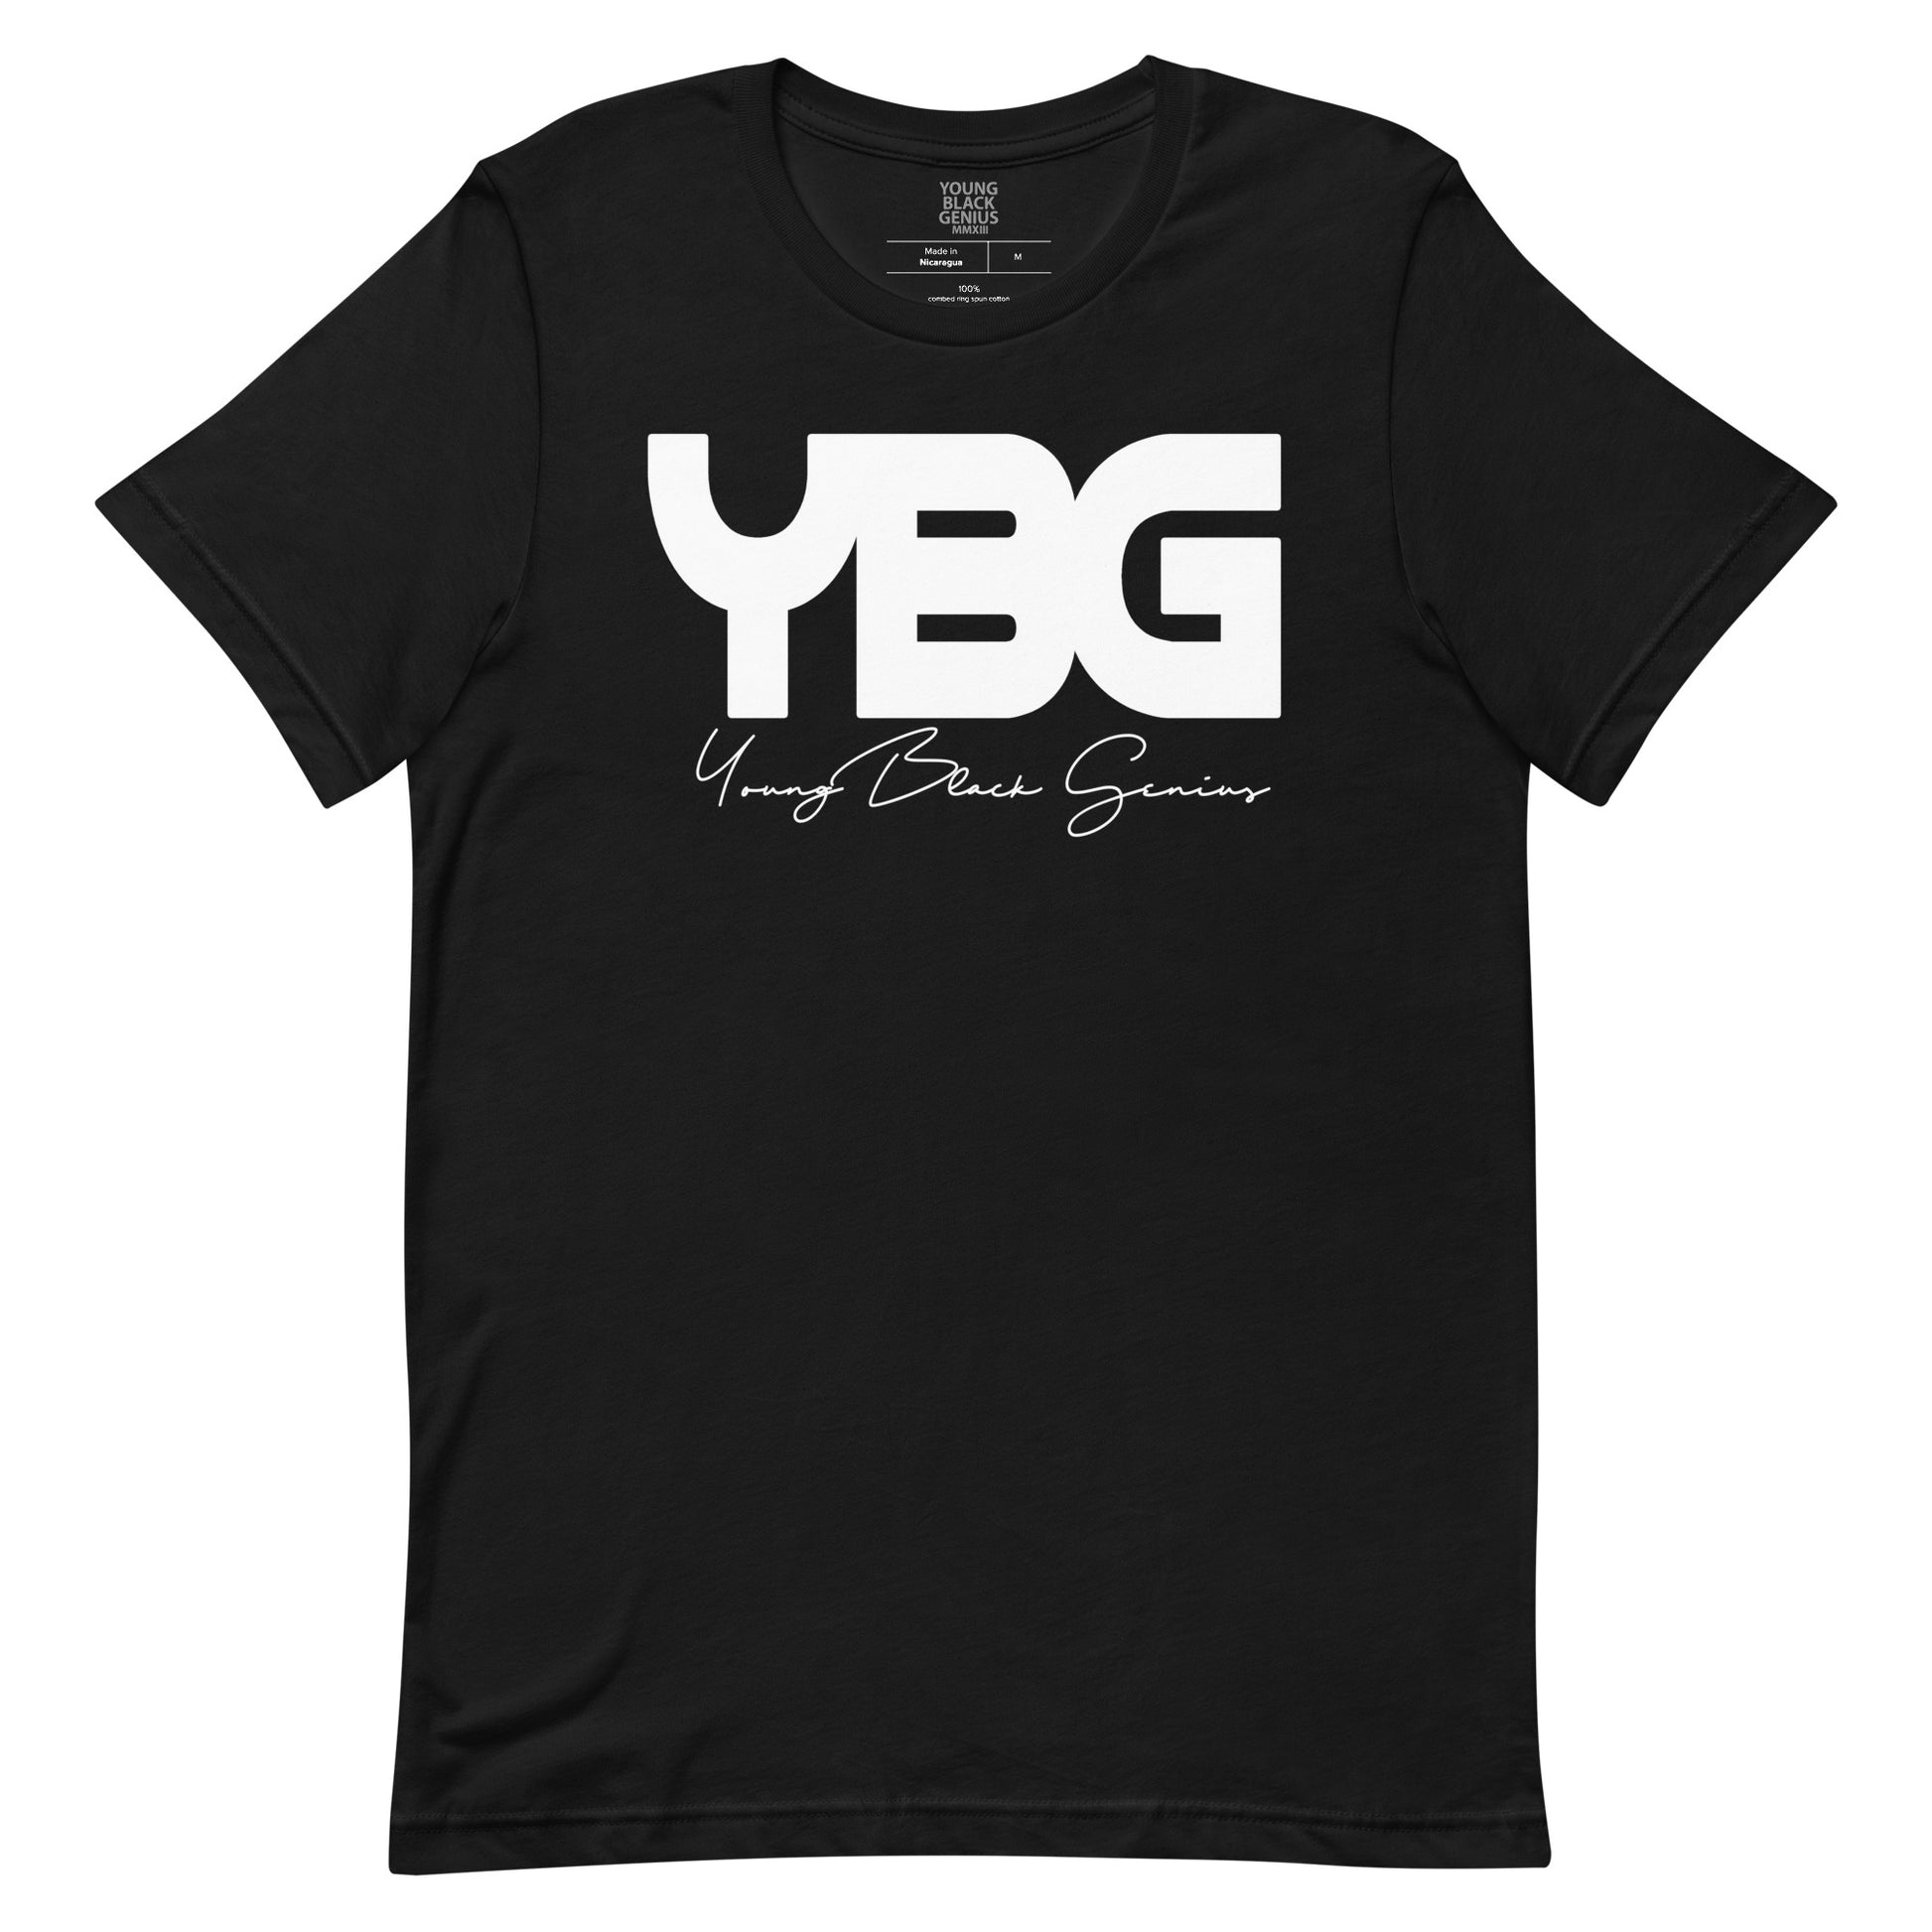 YBG Signature Tee (Multiple Choices/ White)